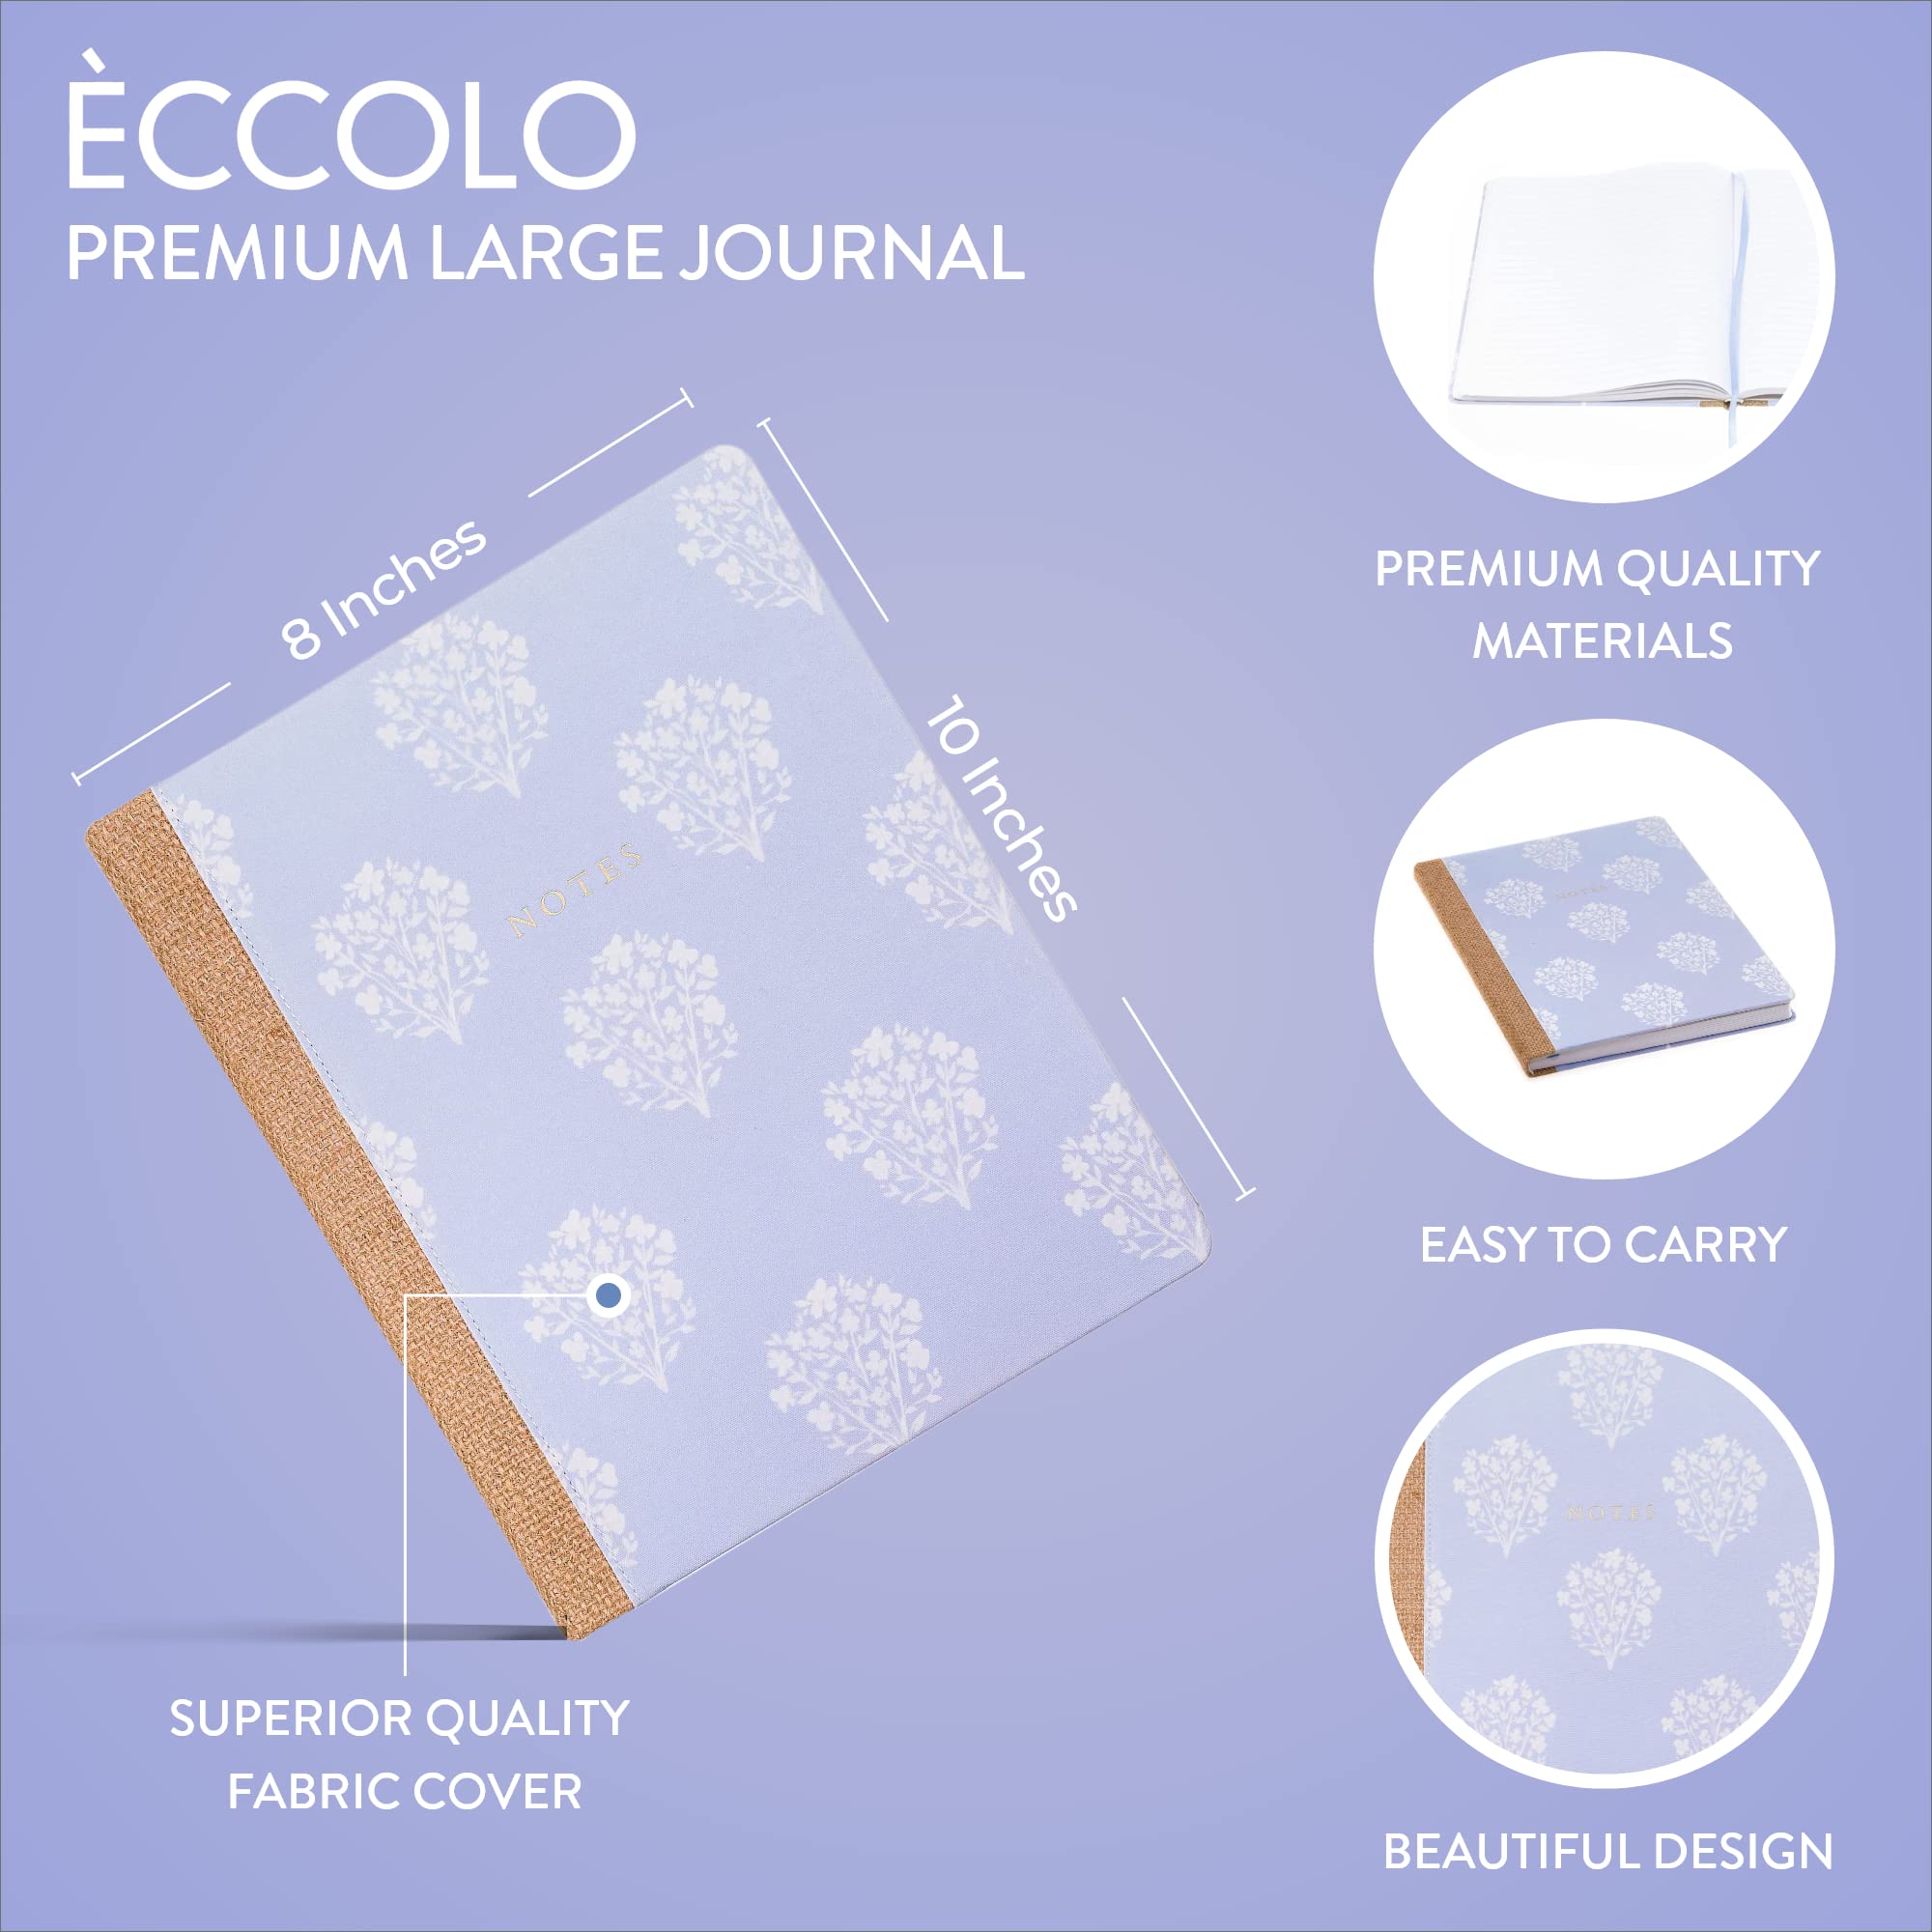 Hardbound Fabric Cover Journal